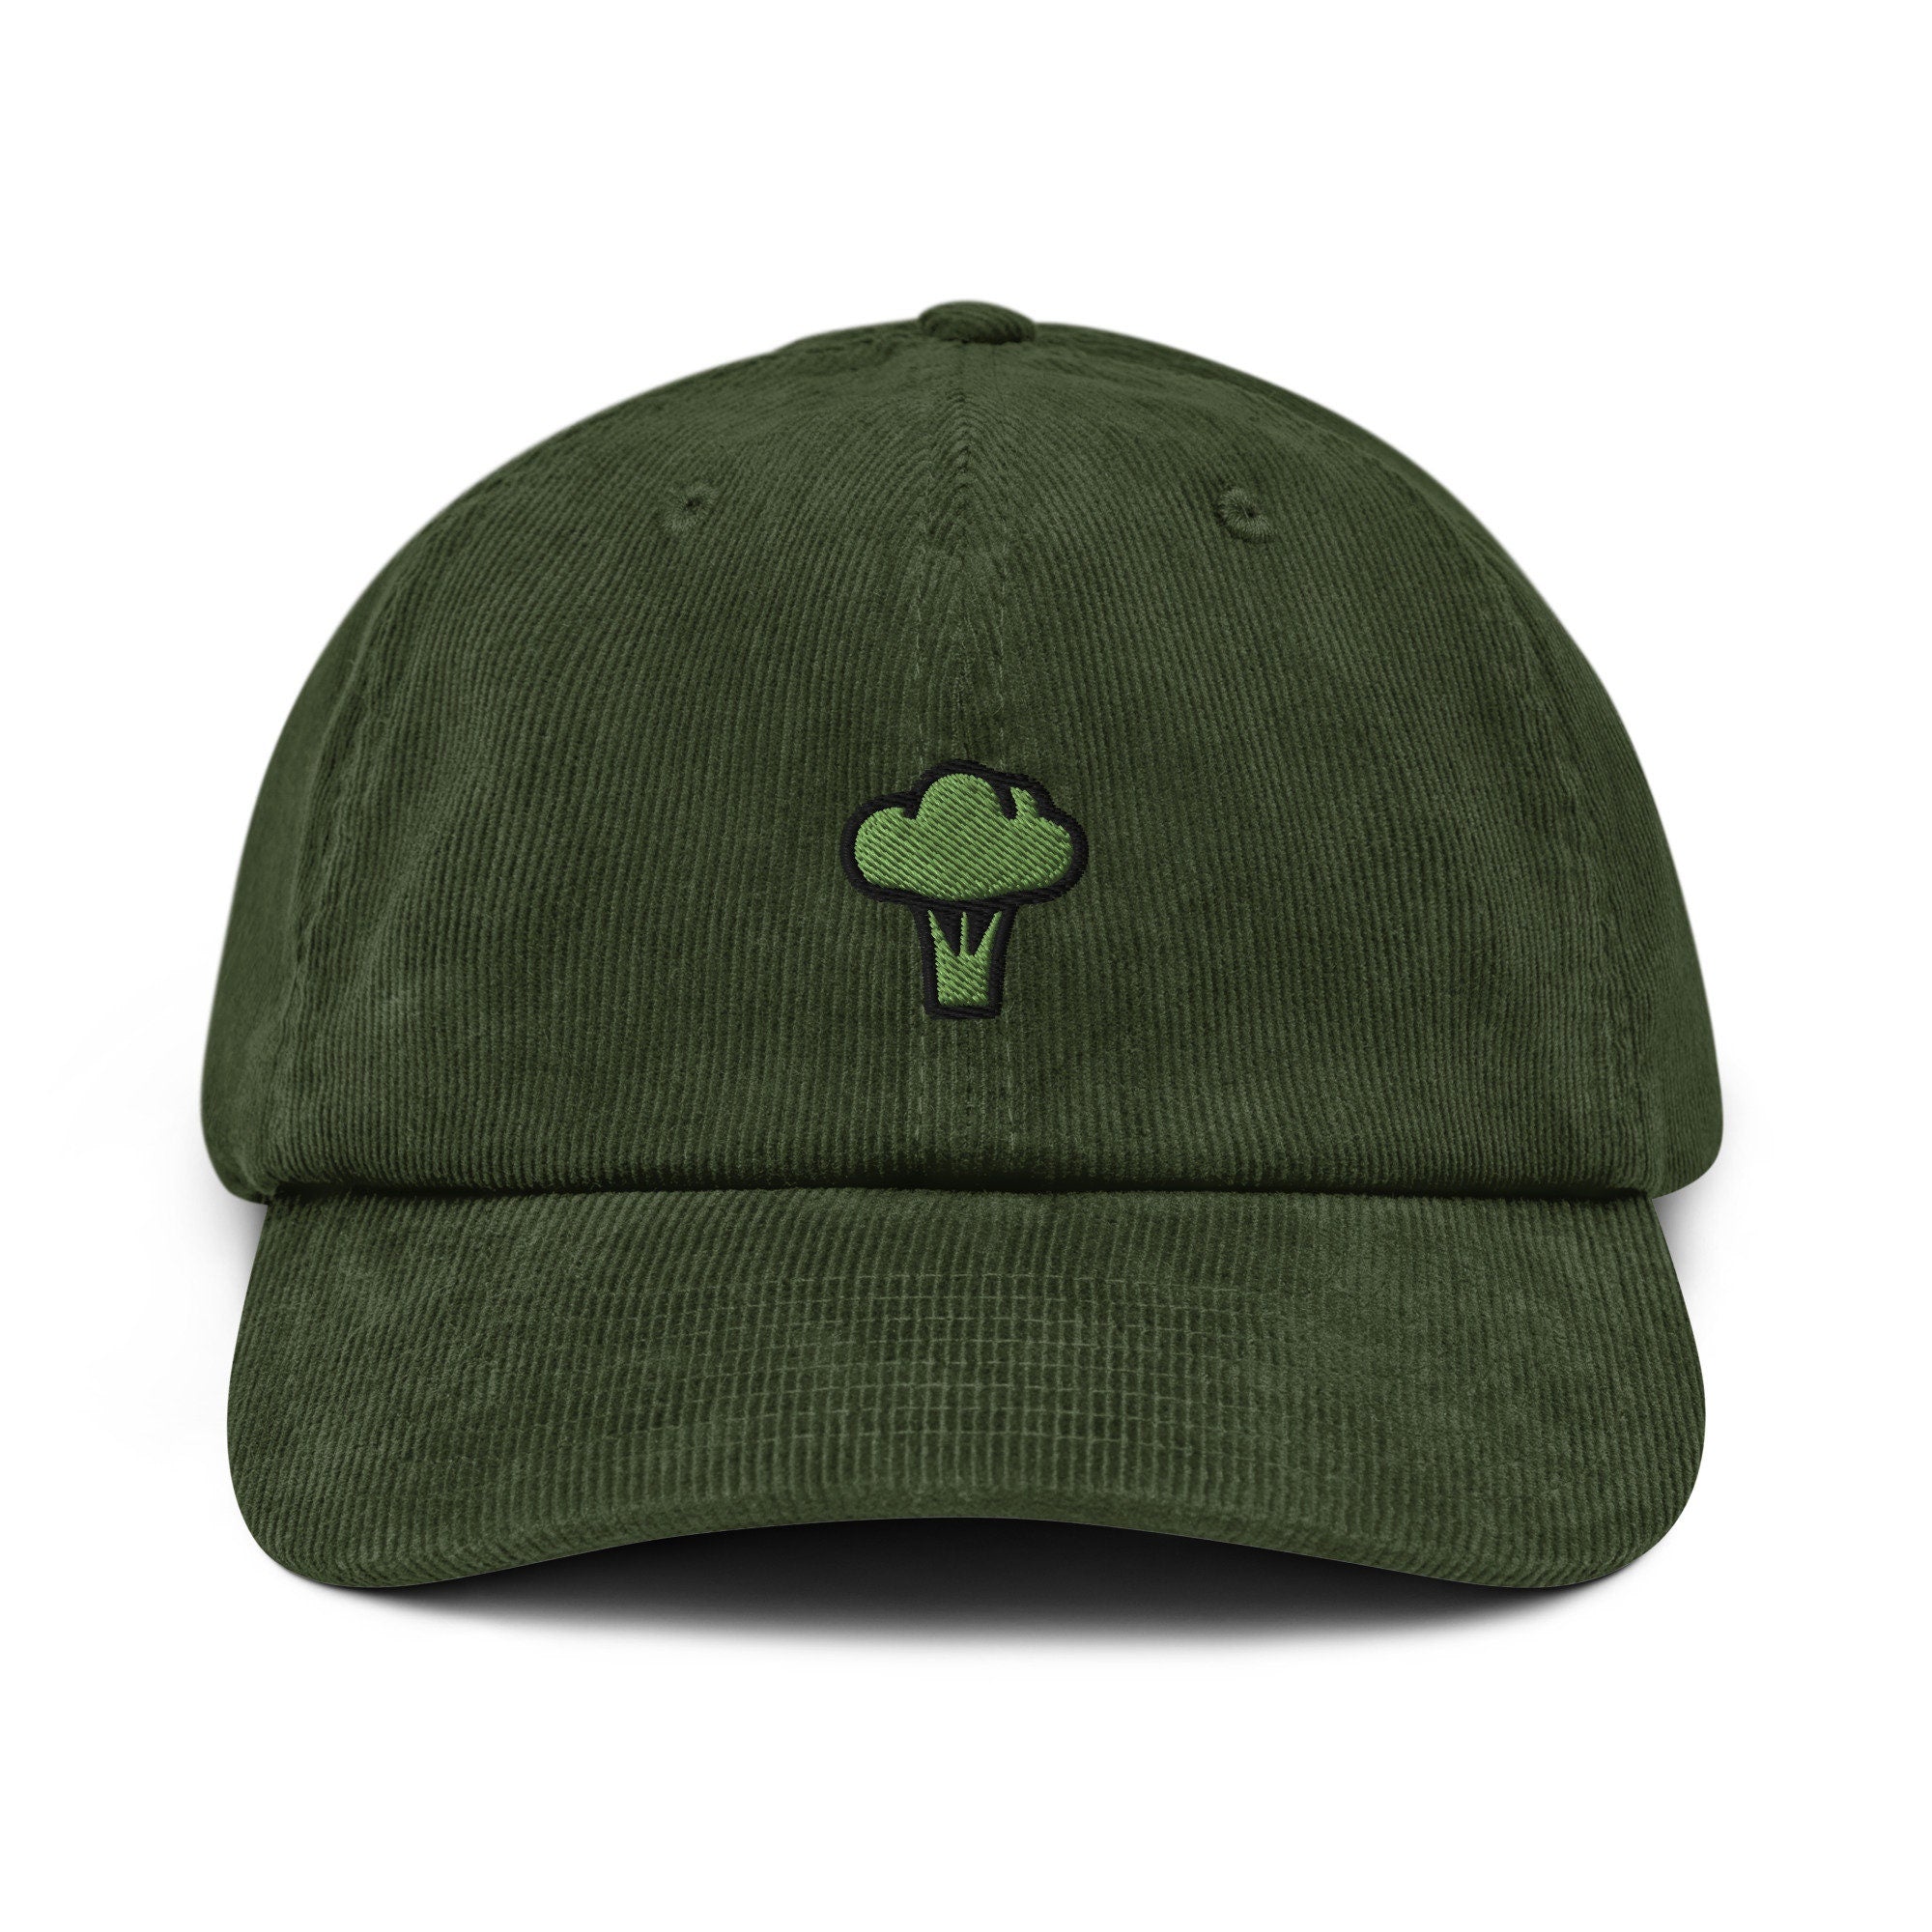 Broccoli Corduroy Hat, Handmade Embroidered Corduroy Dad Cap - Multiple Colors